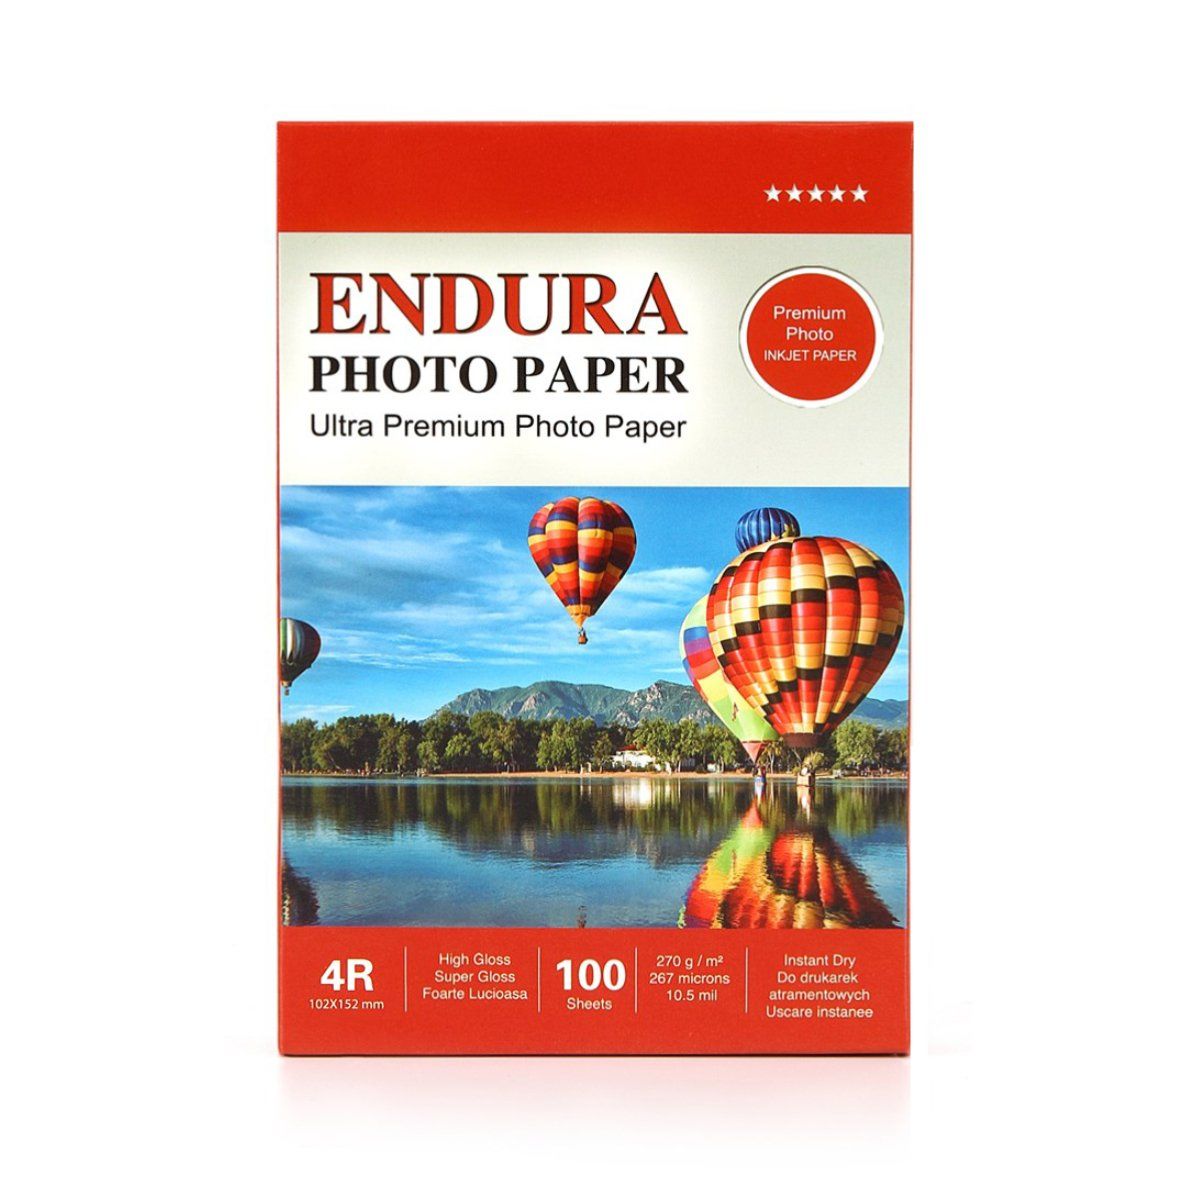 Endura Fotoğraf Kağıdı 4R Glossy-Parlak 10x15 cm 270 gr 100'lük